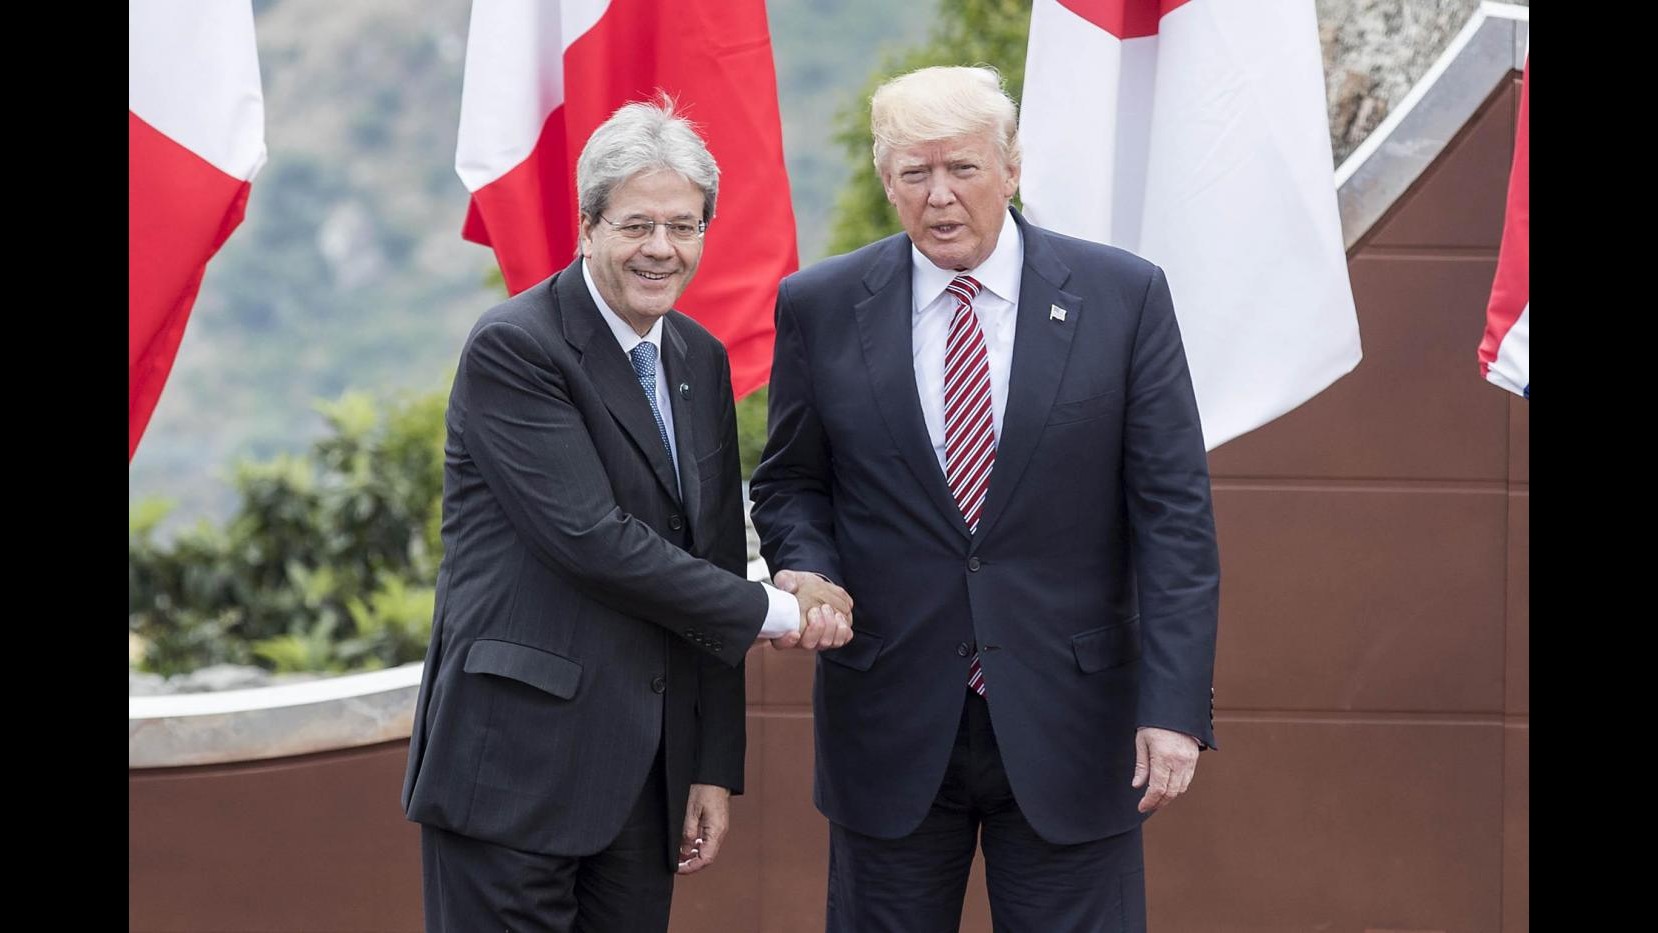 FOTO Al via i G7 i leader in gruppo al summit di Taormina